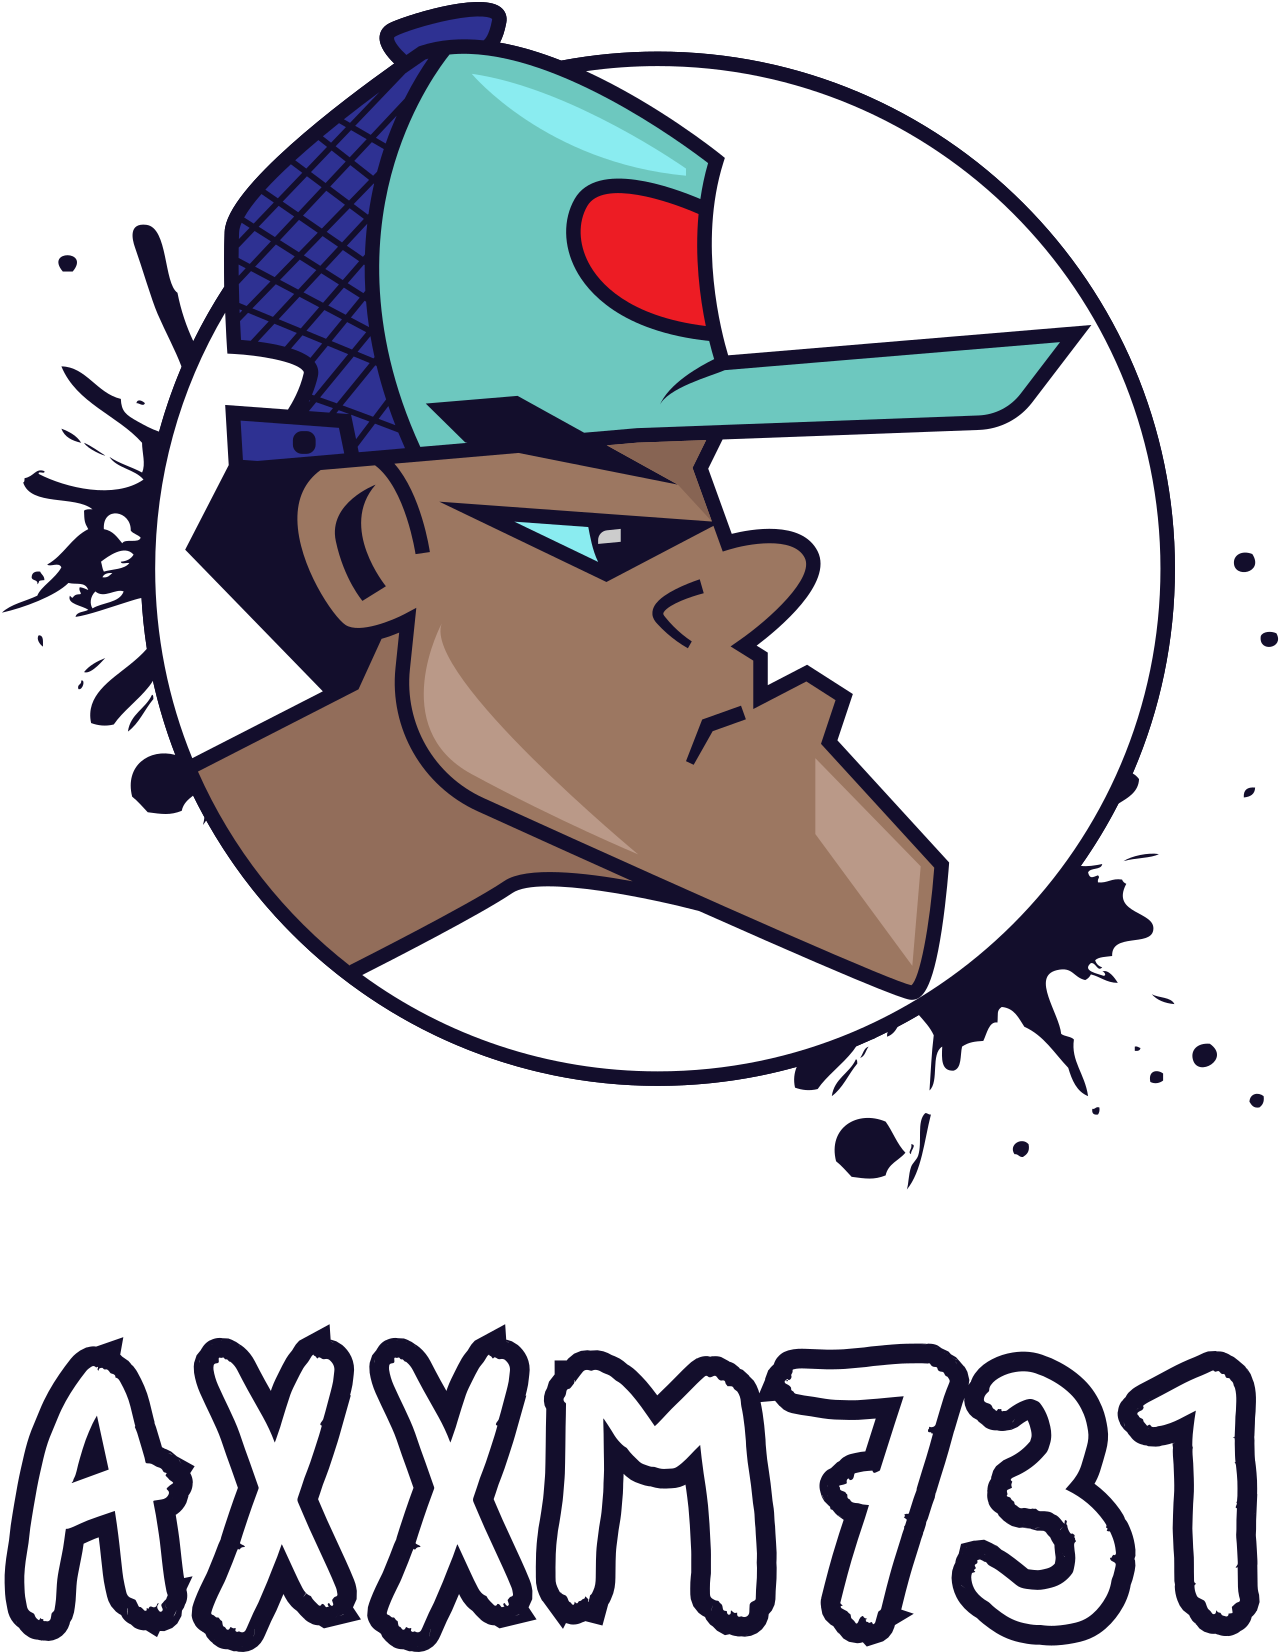 AXXM731's logo